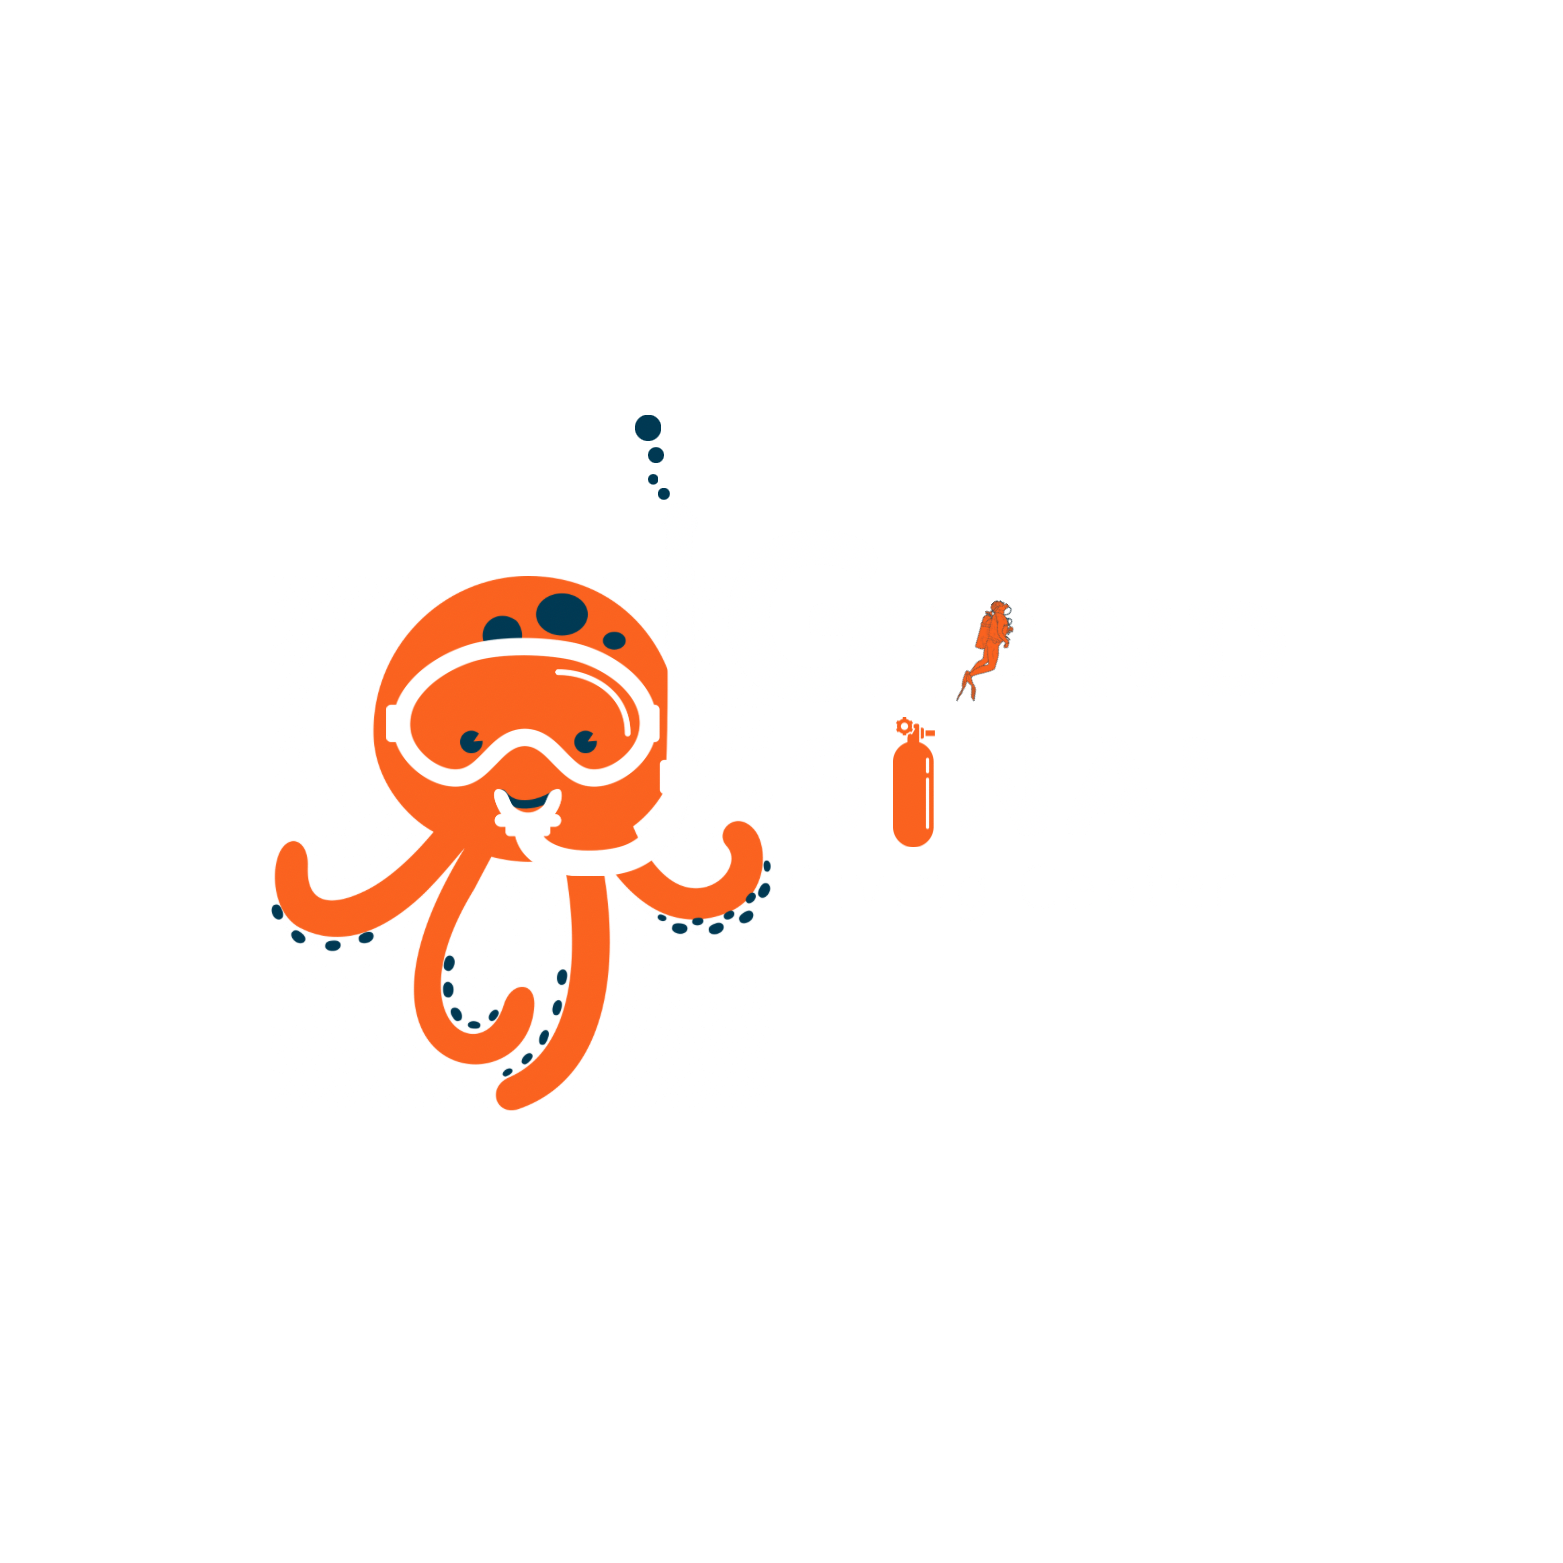 Grand Sinai Diving Club